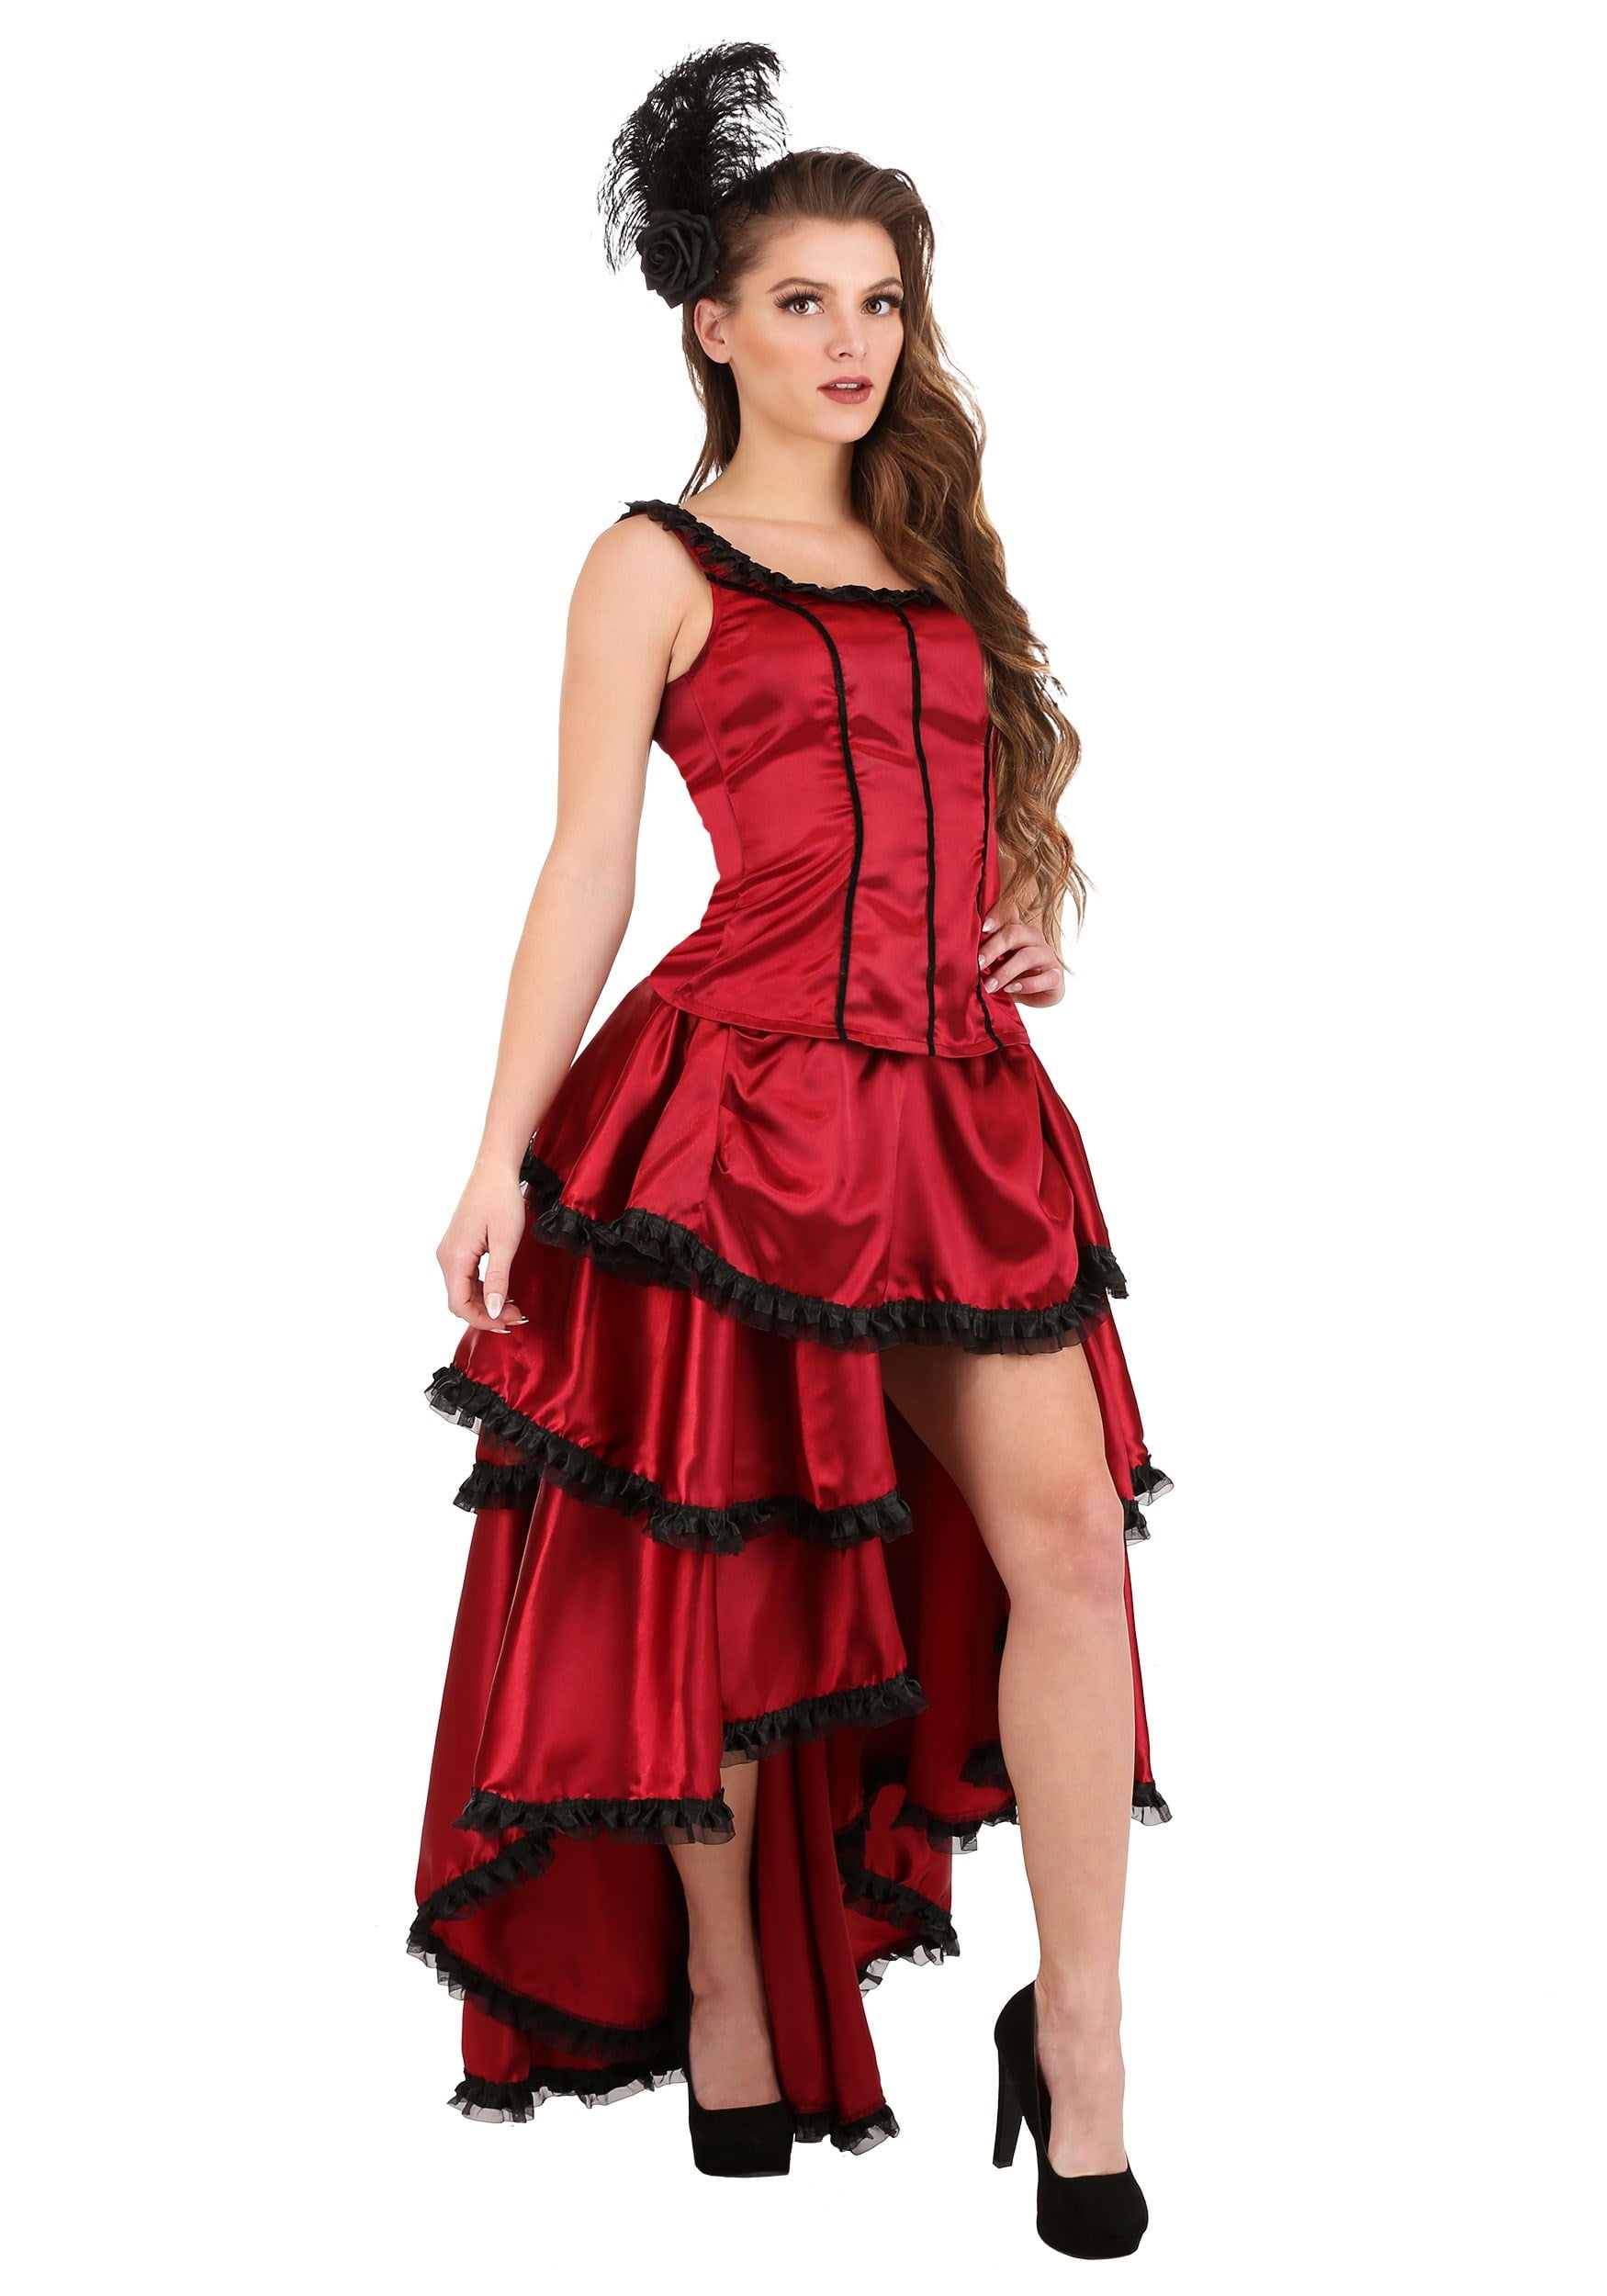 Women's Sultry Saloon Girl Costume - Walmart.com